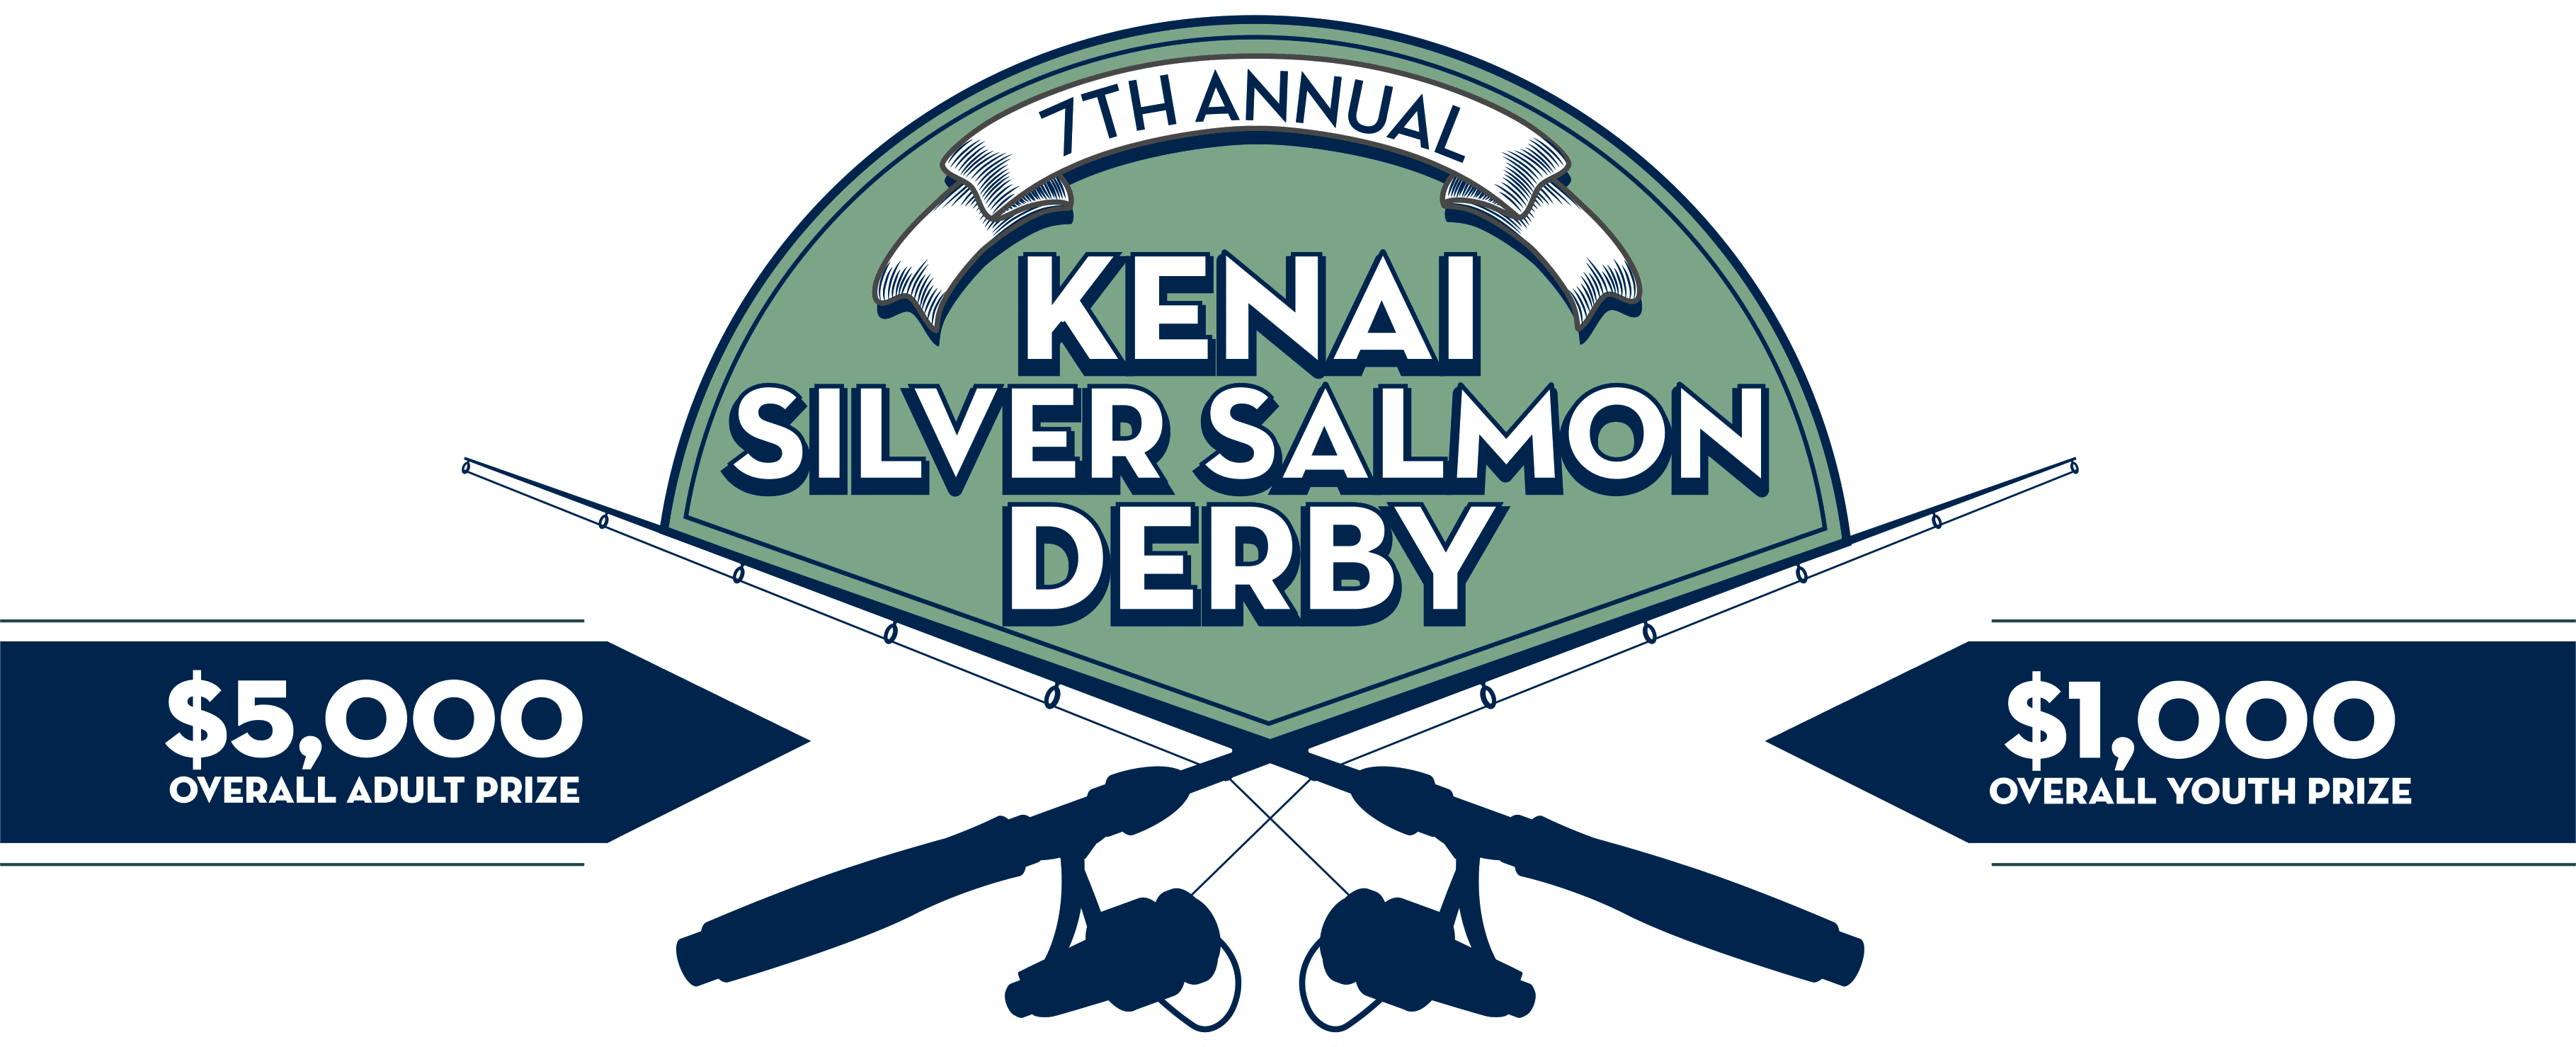 7th Annual Logo Kenai Salmon Derby - with prize details